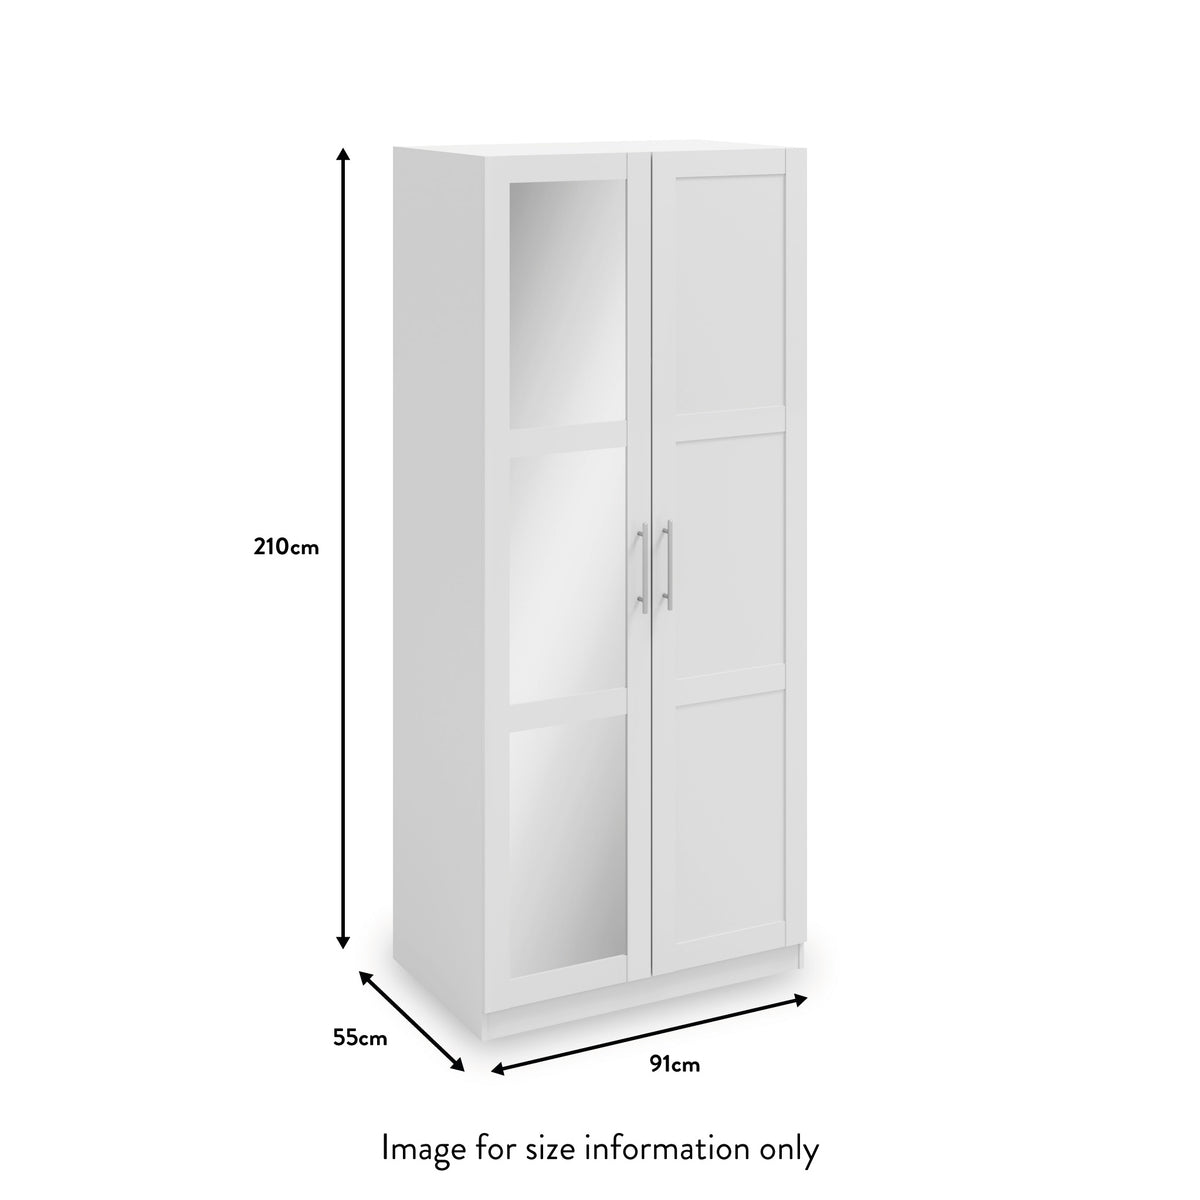 Bithlo White 2 Door Mirrored Wardrobe dimensions